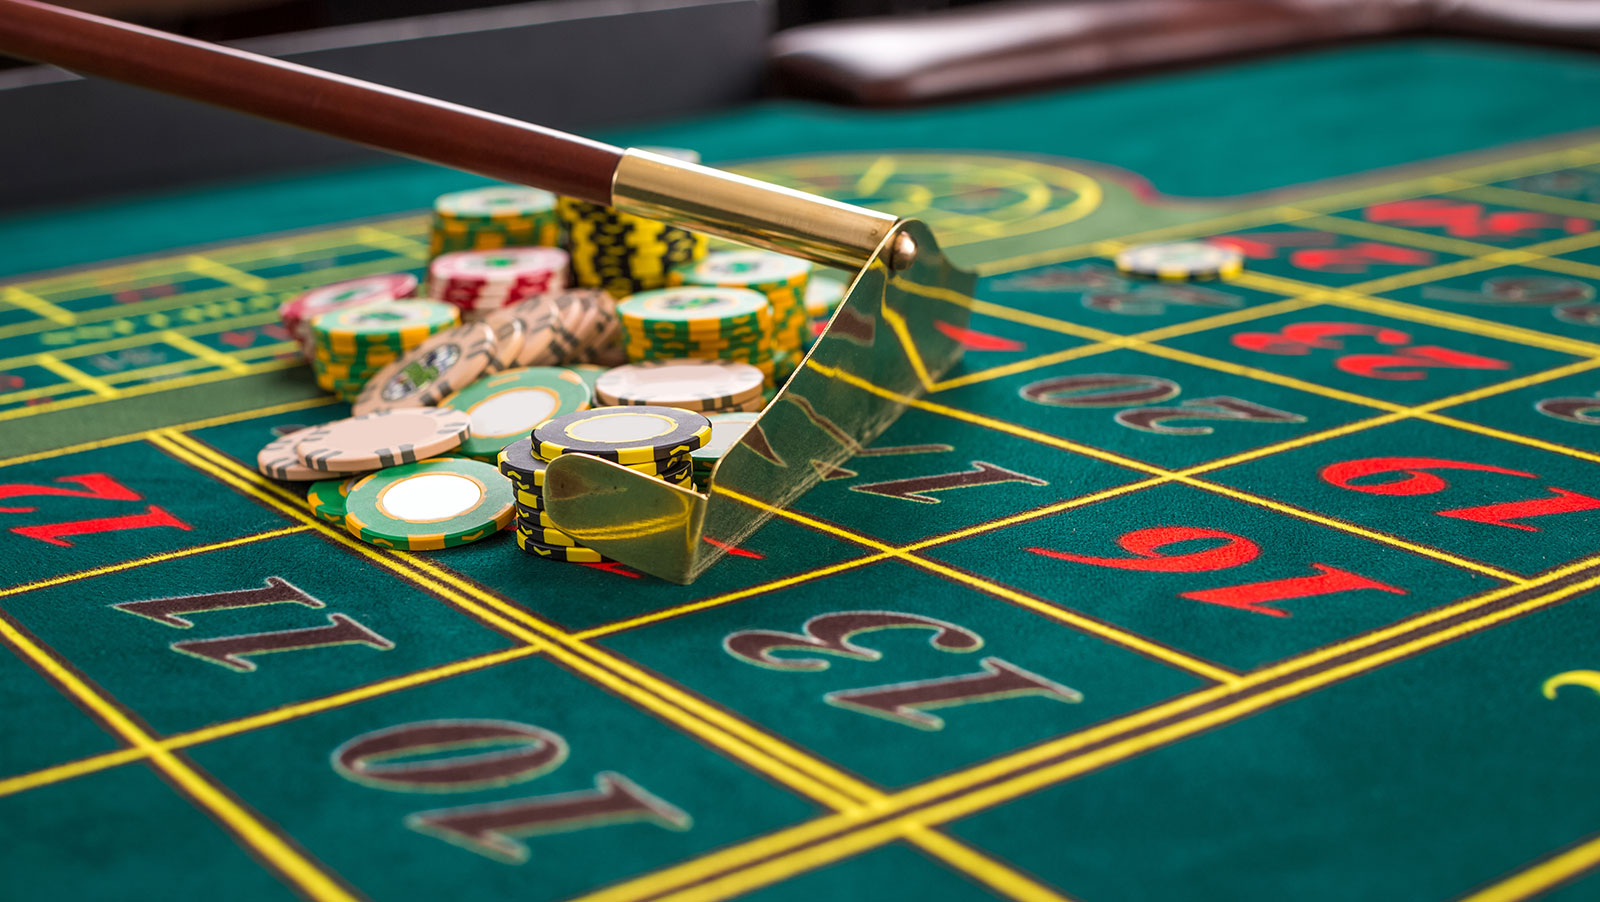 Suncity joins consortium for Japan casino bid